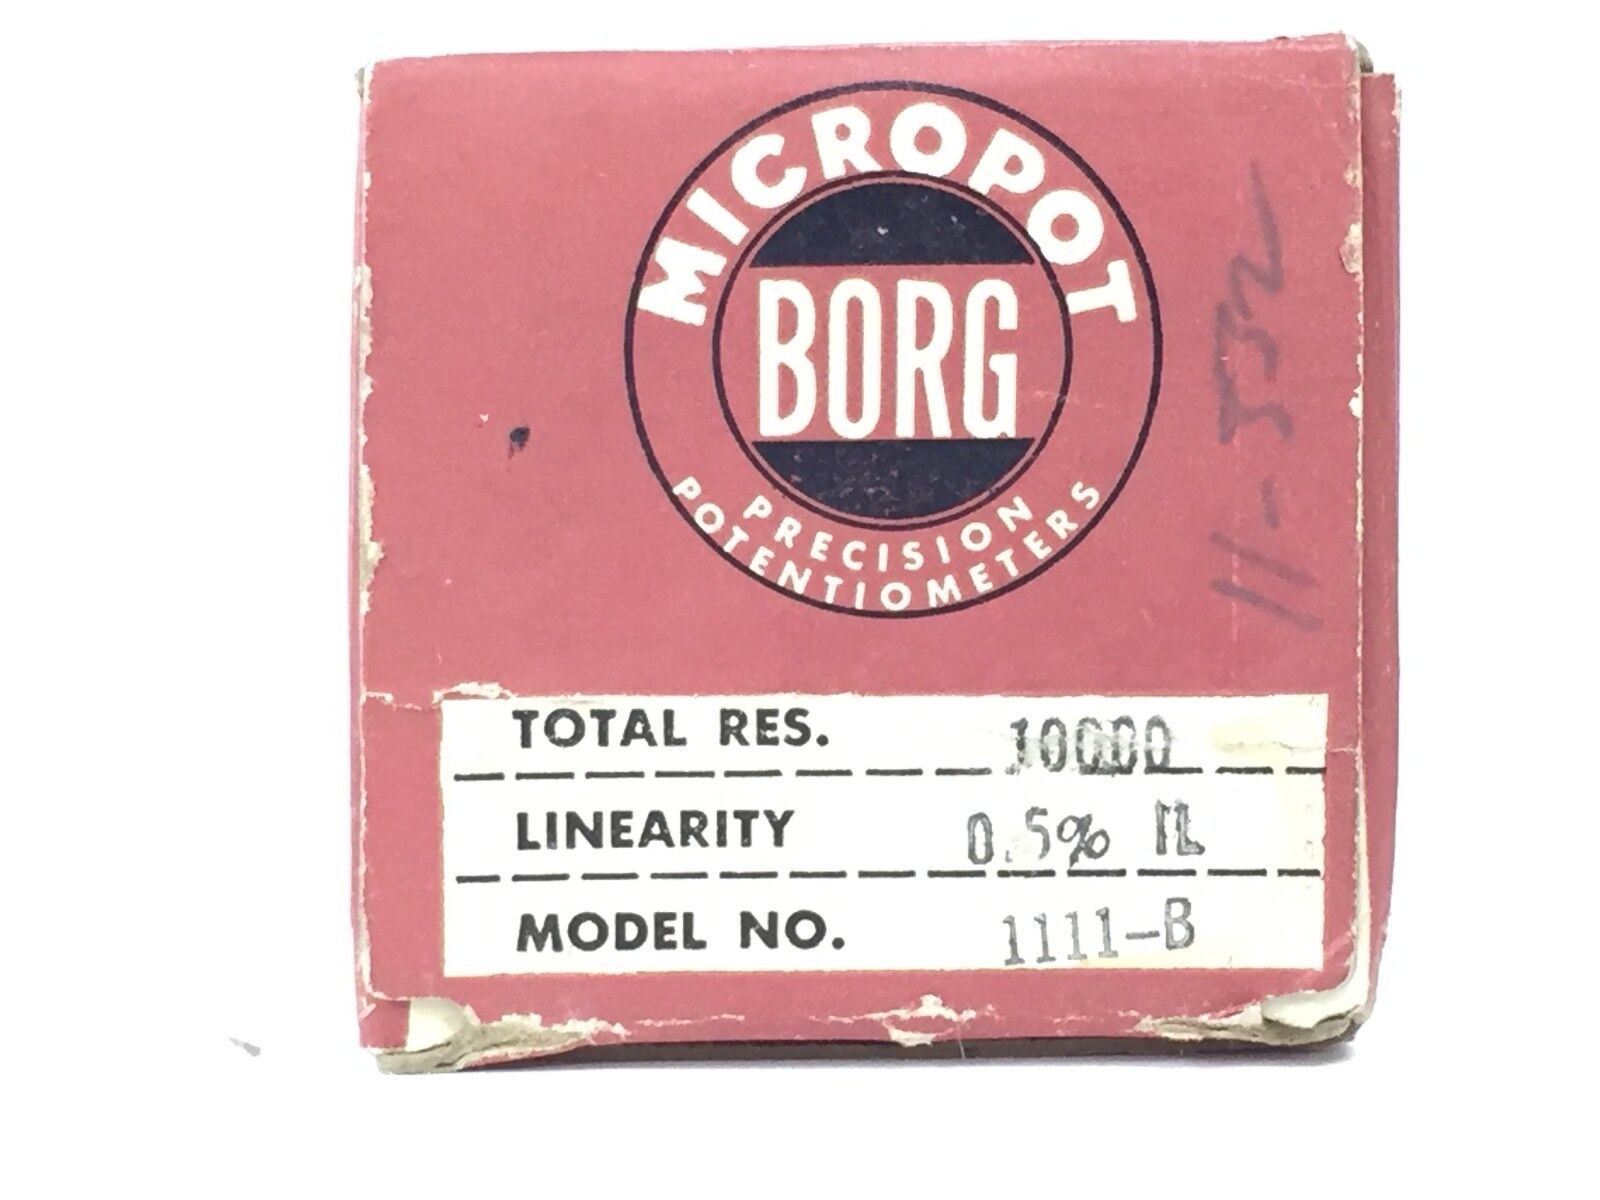 Borg Micropot Model 1111-B